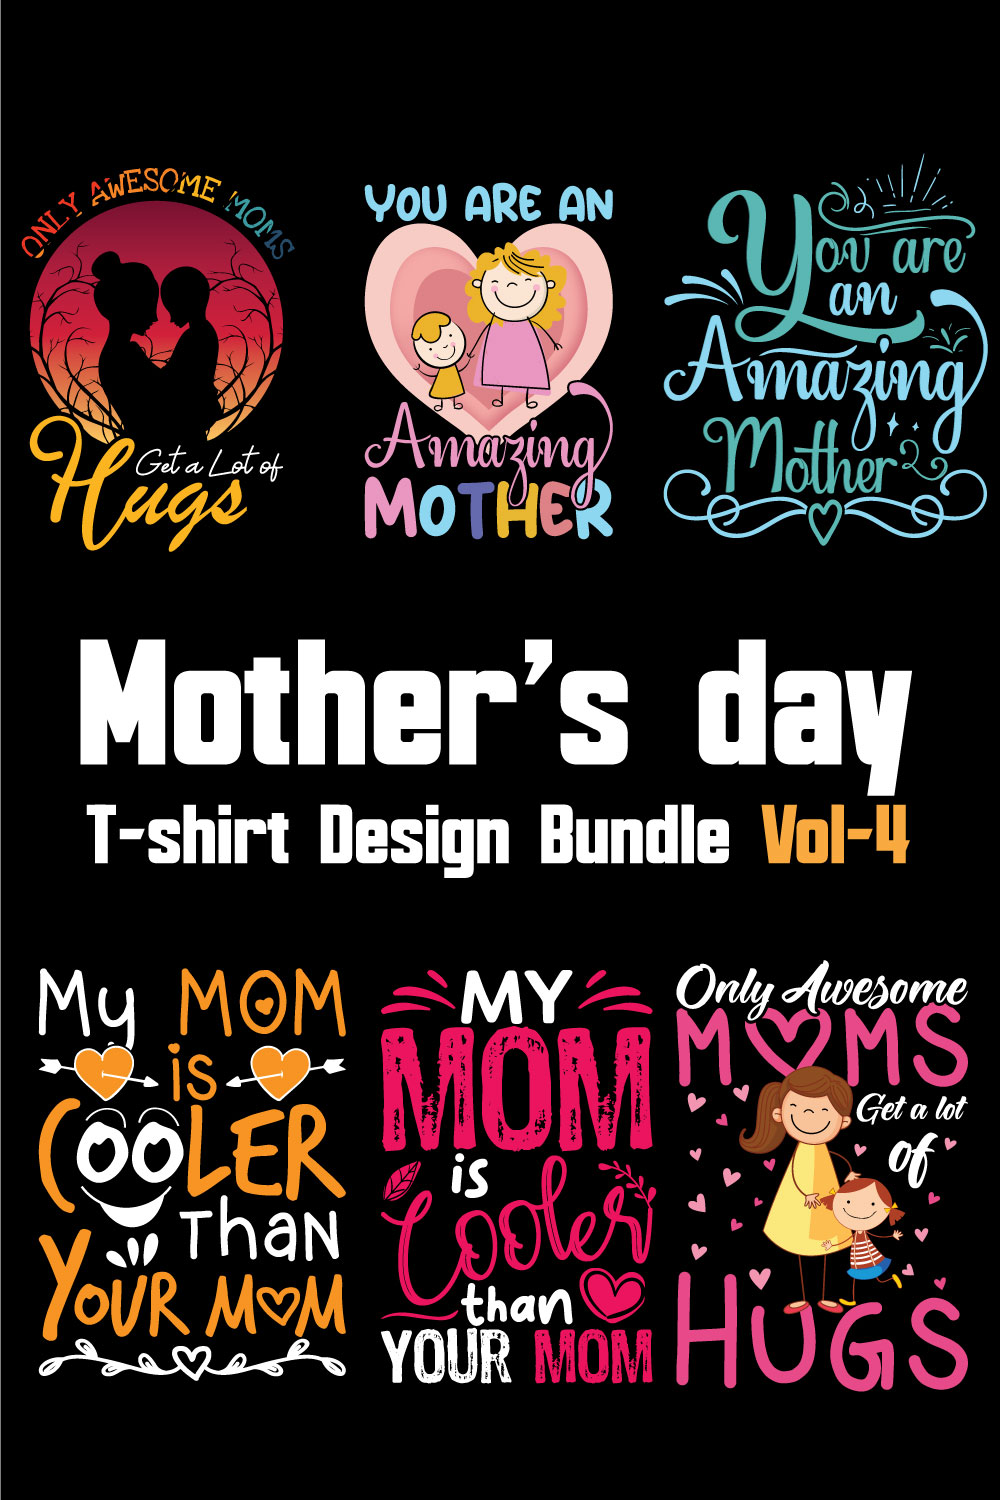 Mother's Day T-shirt Design Bundle Vol-4 pinterest preview image.